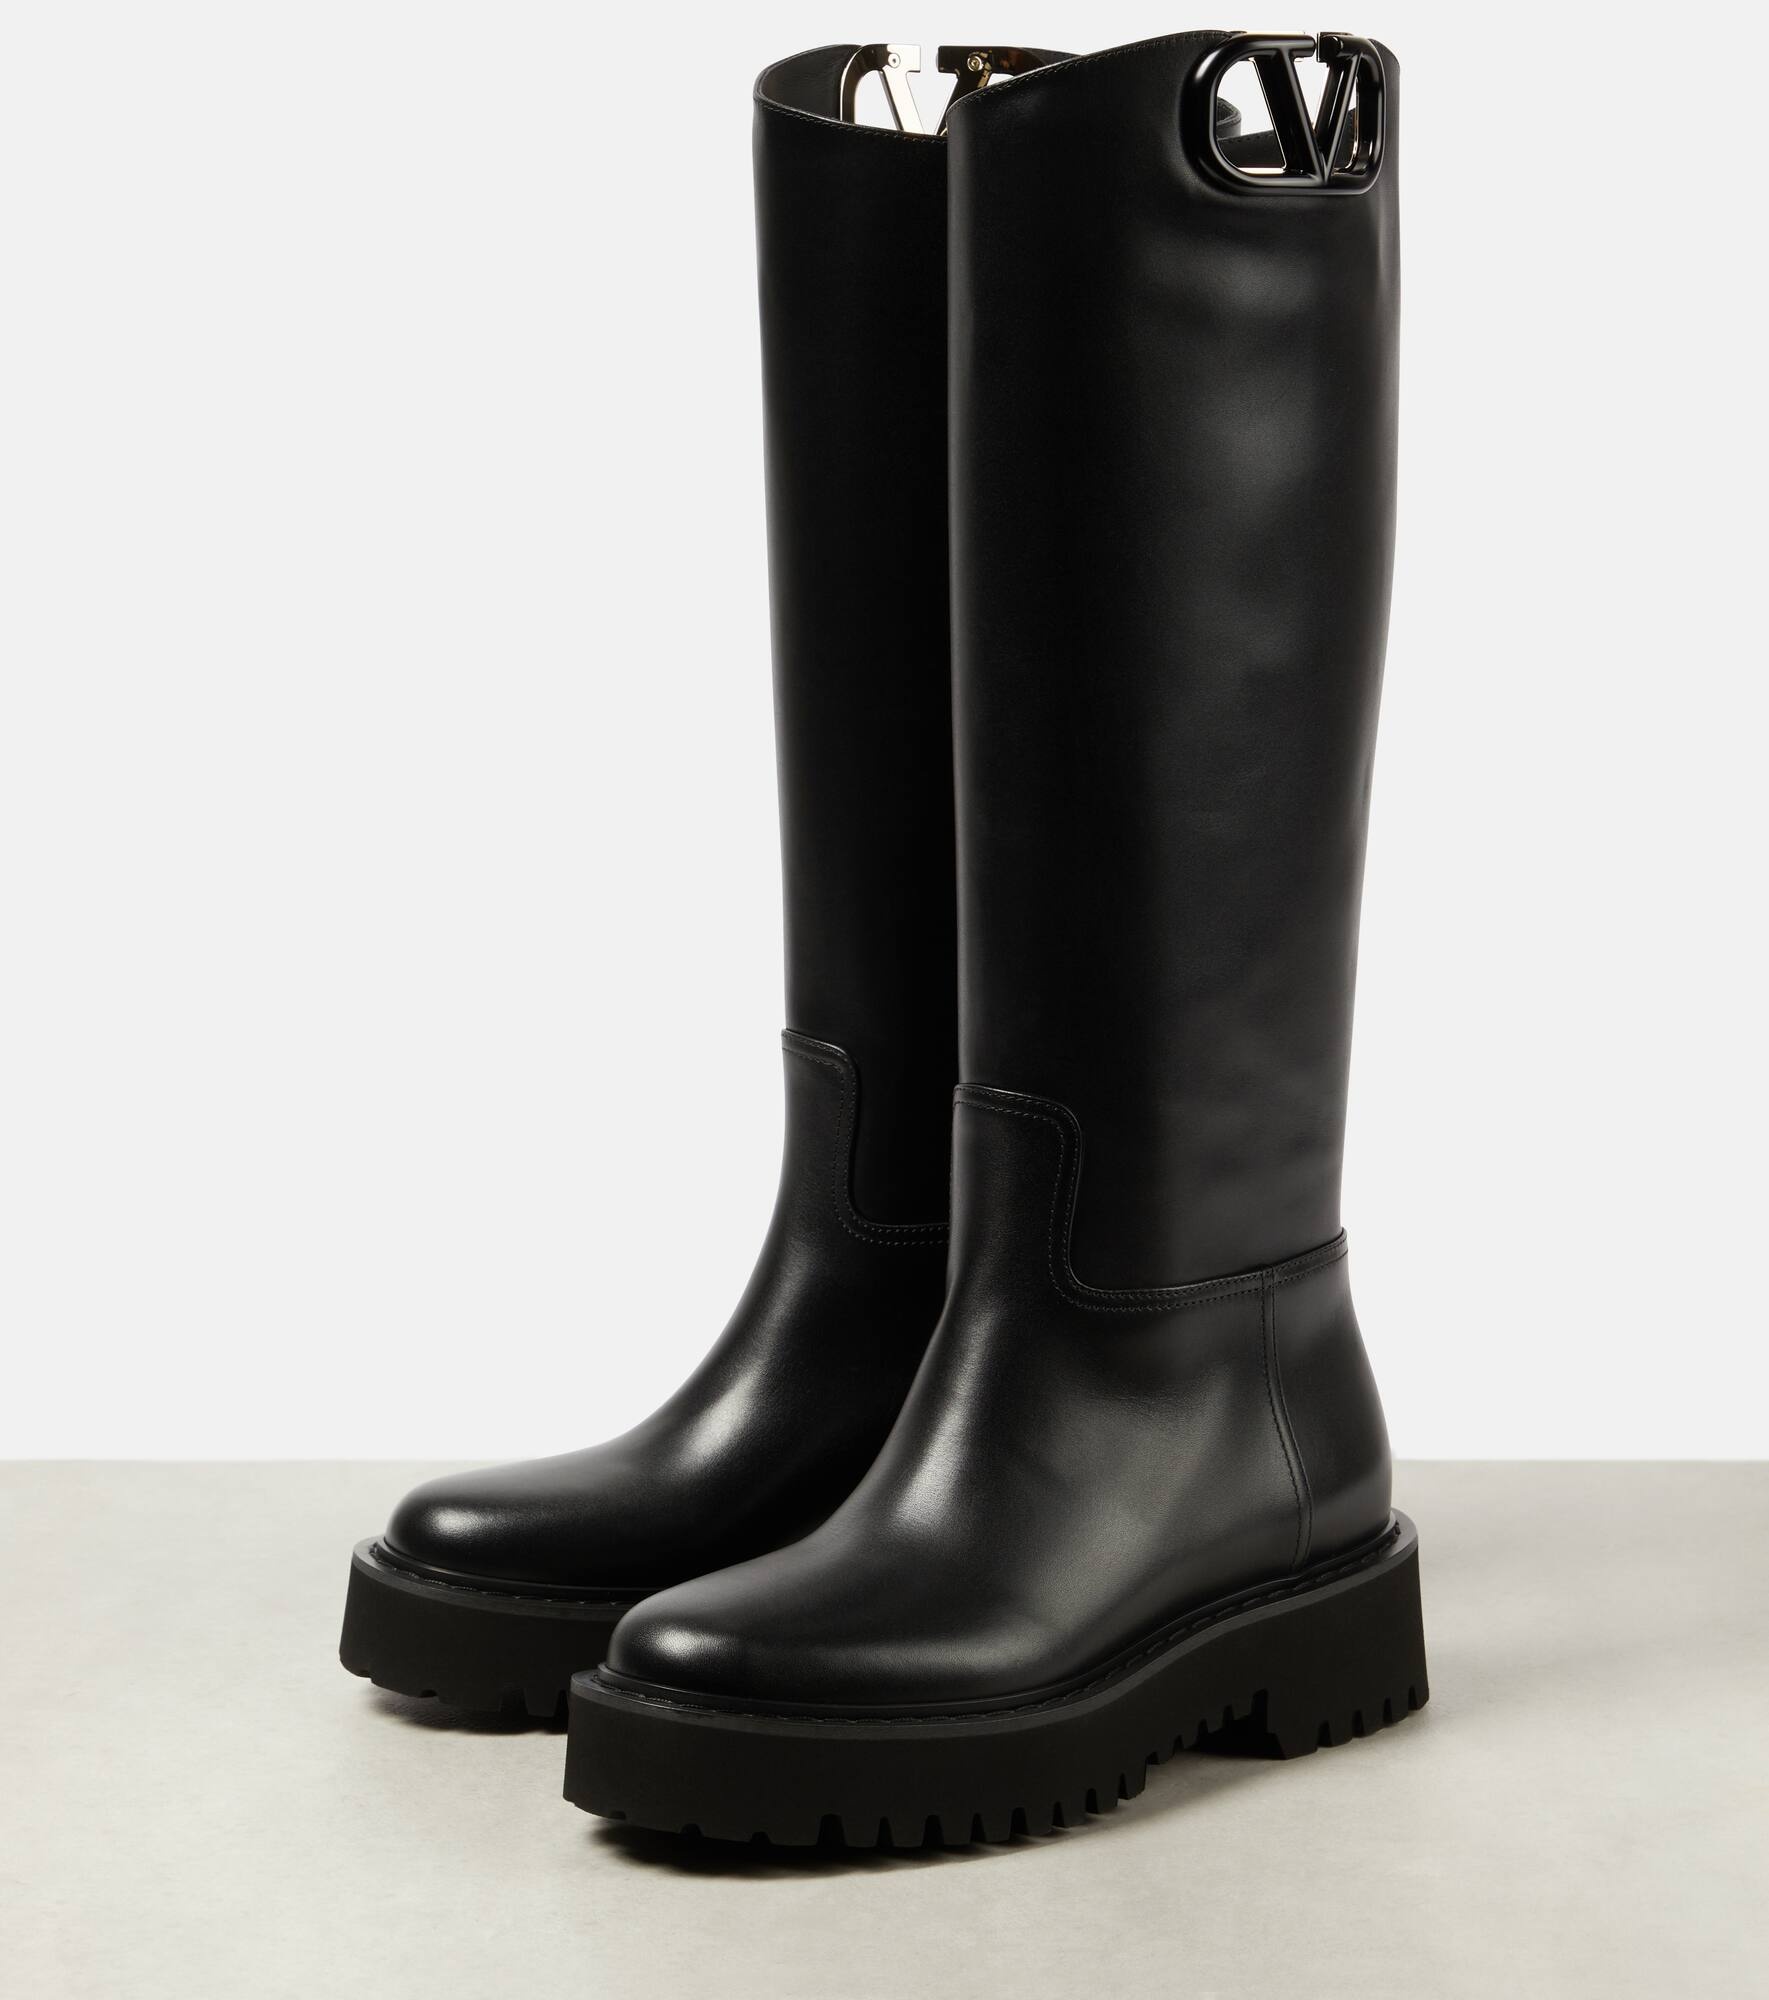 VLogo Signature leather rain boots - 5